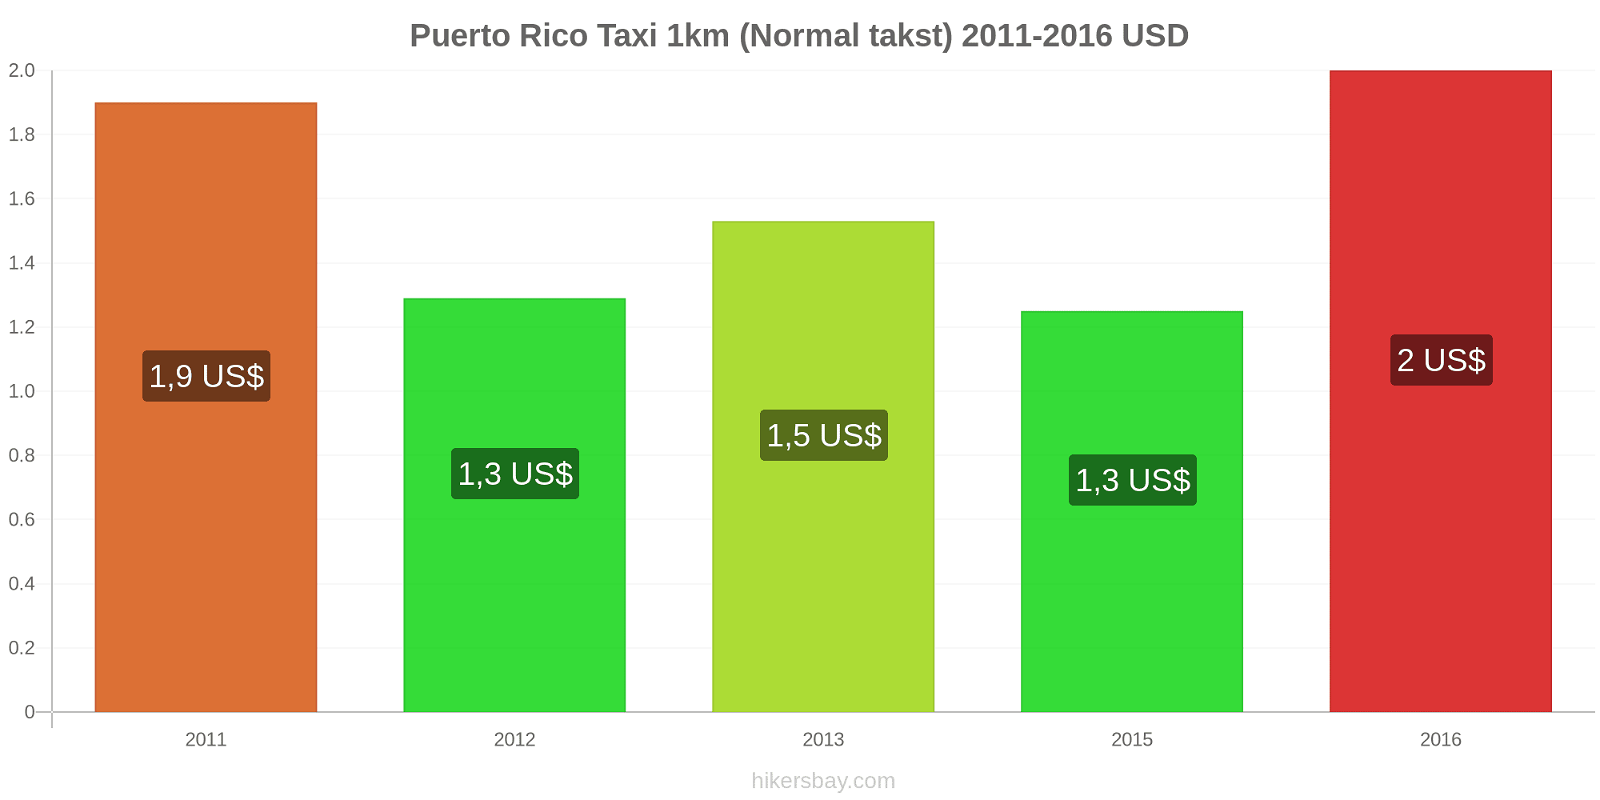 Puerto Rico prisændringer Taxi 1km (normal takst) hikersbay.com